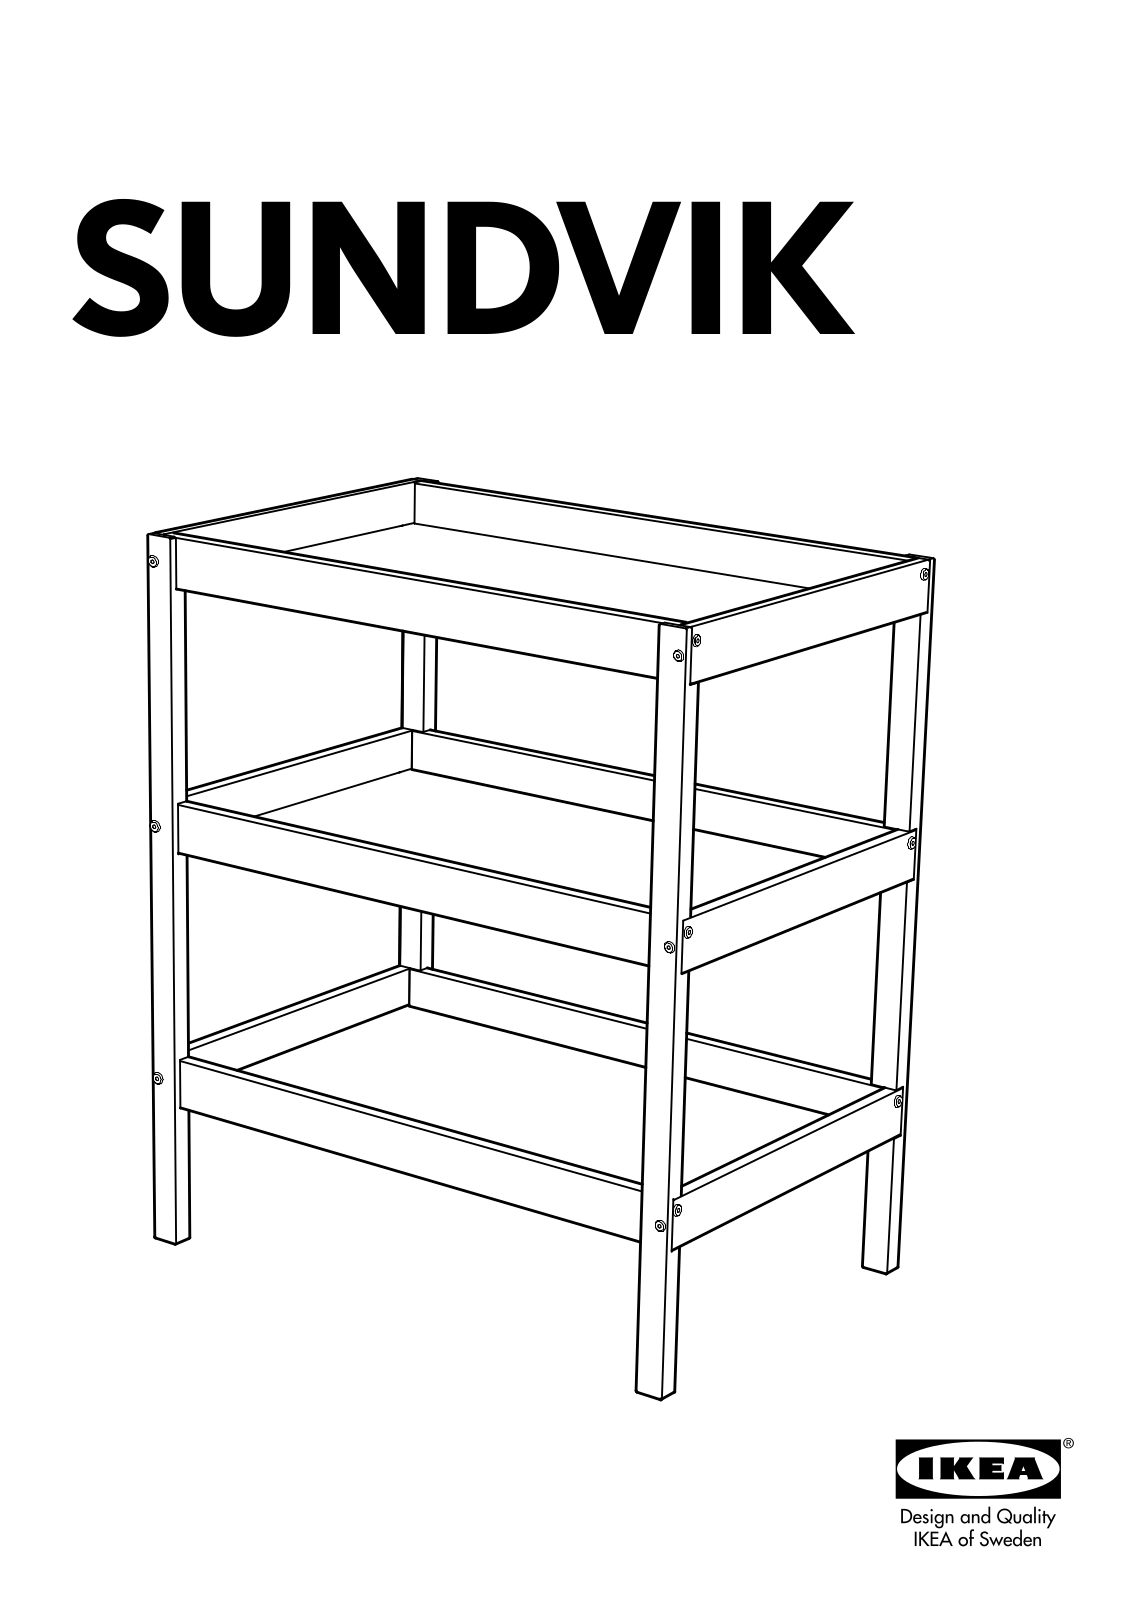 IKEA SUNDVIK Changing table User Manual